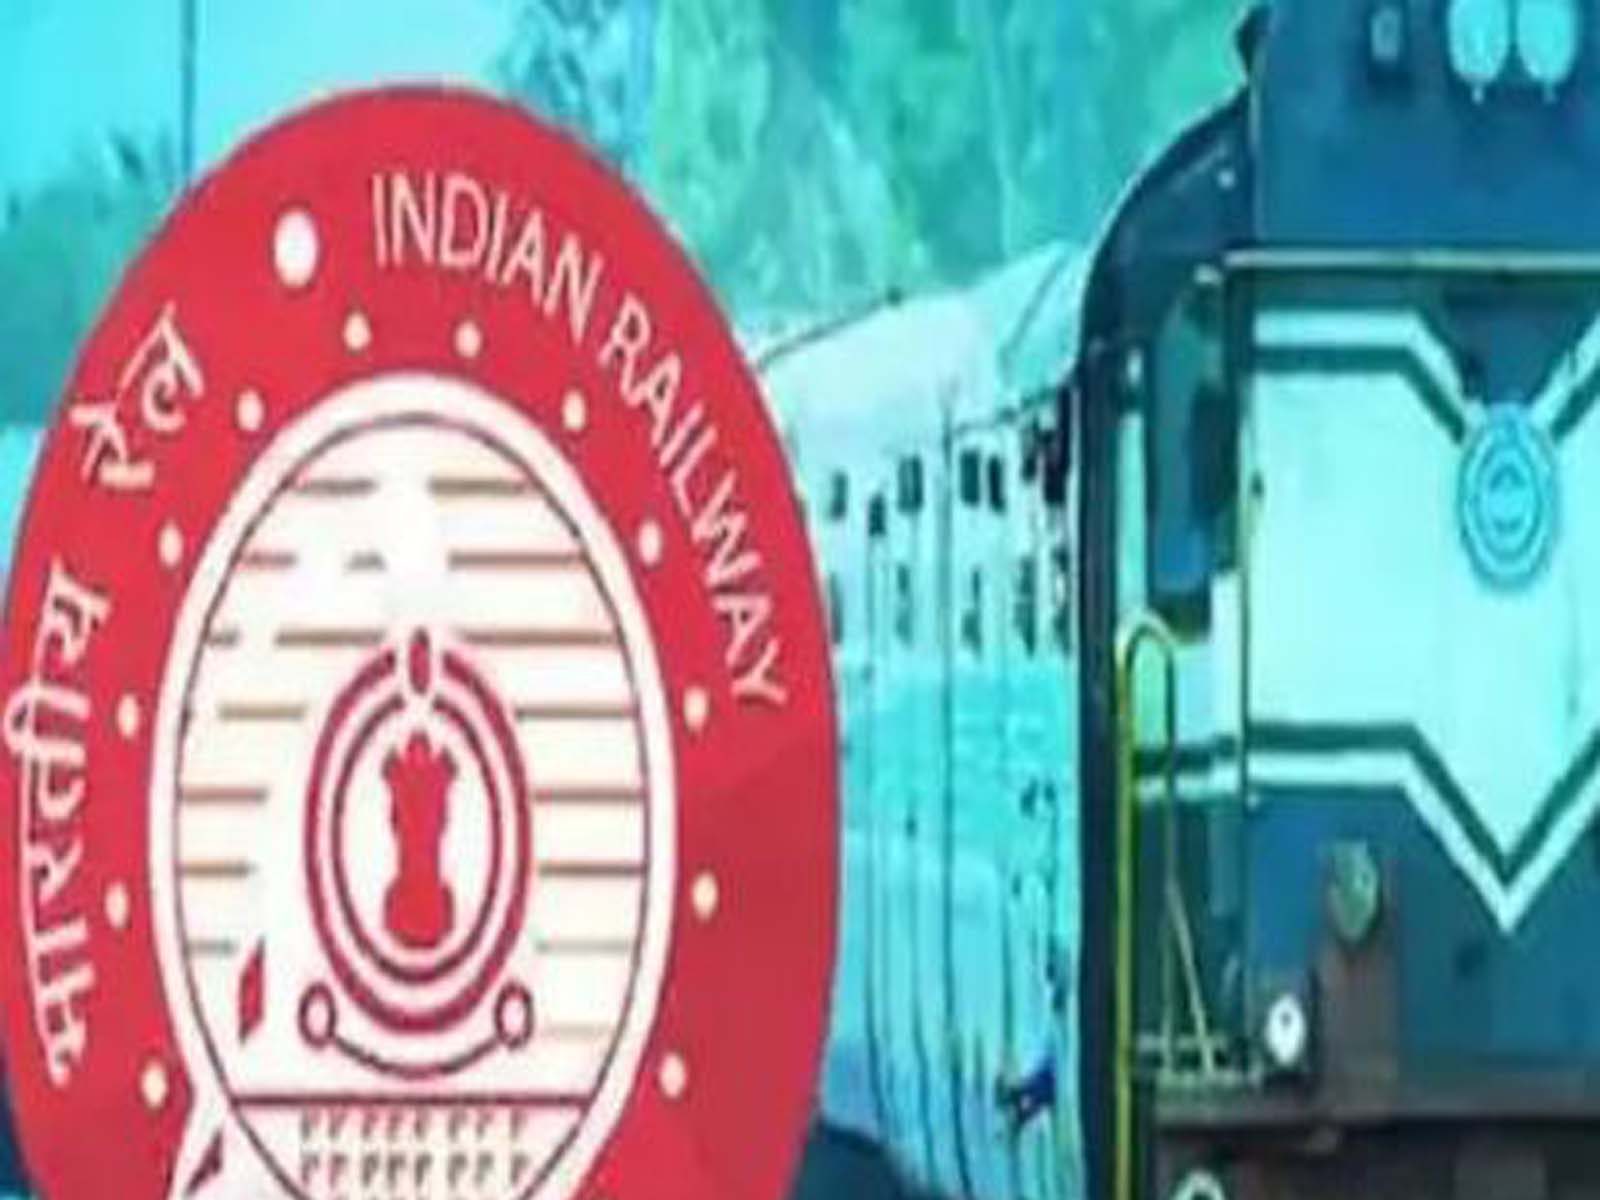 Punjab News: ਸ੍ਰੀ ਗੁਰੂ ਗੋਬਿੰਦ ਸਿੰਘ ਜੀ (Guru Gobind Singh Ji) ਮਹਾਰਾਜ ਦੇ ਪ੍ਰਕਾਸ਼ ਪੁਰਬ ਮੌਕੇ 7 ਤੋਂ 9 ਜਨਵਰੀ ਤੱਕ ਮਨਾਏ ਜਾਣ ਵਾਲੇ 355ਵੇਂ ਪ੍ਰਕਾਸ਼ ਪੁਰਬ ਲਈ ਦੇਸ਼-ਵਿਦੇਸ਼ ਤੋਂ ਪਟਨਾ ਸਾਹਿਬ (Patna Sahib) ਆਉਣ ਵਾਲੇ ਸਿੱਖ ਸ਼ਰਧਾਲੂਆਂ ਨੂੰ ਰੇਲਵੇ ਨੇ ਵੱਡੀ ਸਹੂਲਤ (Railways provide facilities to Sikh pilgrims) ਦਿੱਤੀ ਹੈ। 15 ਜਨਵਰੀ 2022 ਤੱਕ 23 ਜੋੜੀ ਟਰੇਨਾਂ ਪਟਨਾ ਸਾਹਿਬ ਸਟੇਸ਼ਨ 'ਤੇ 2 ਮਿੰਟ ਲਈ ਰੁਕਣਗੀਆਂ।